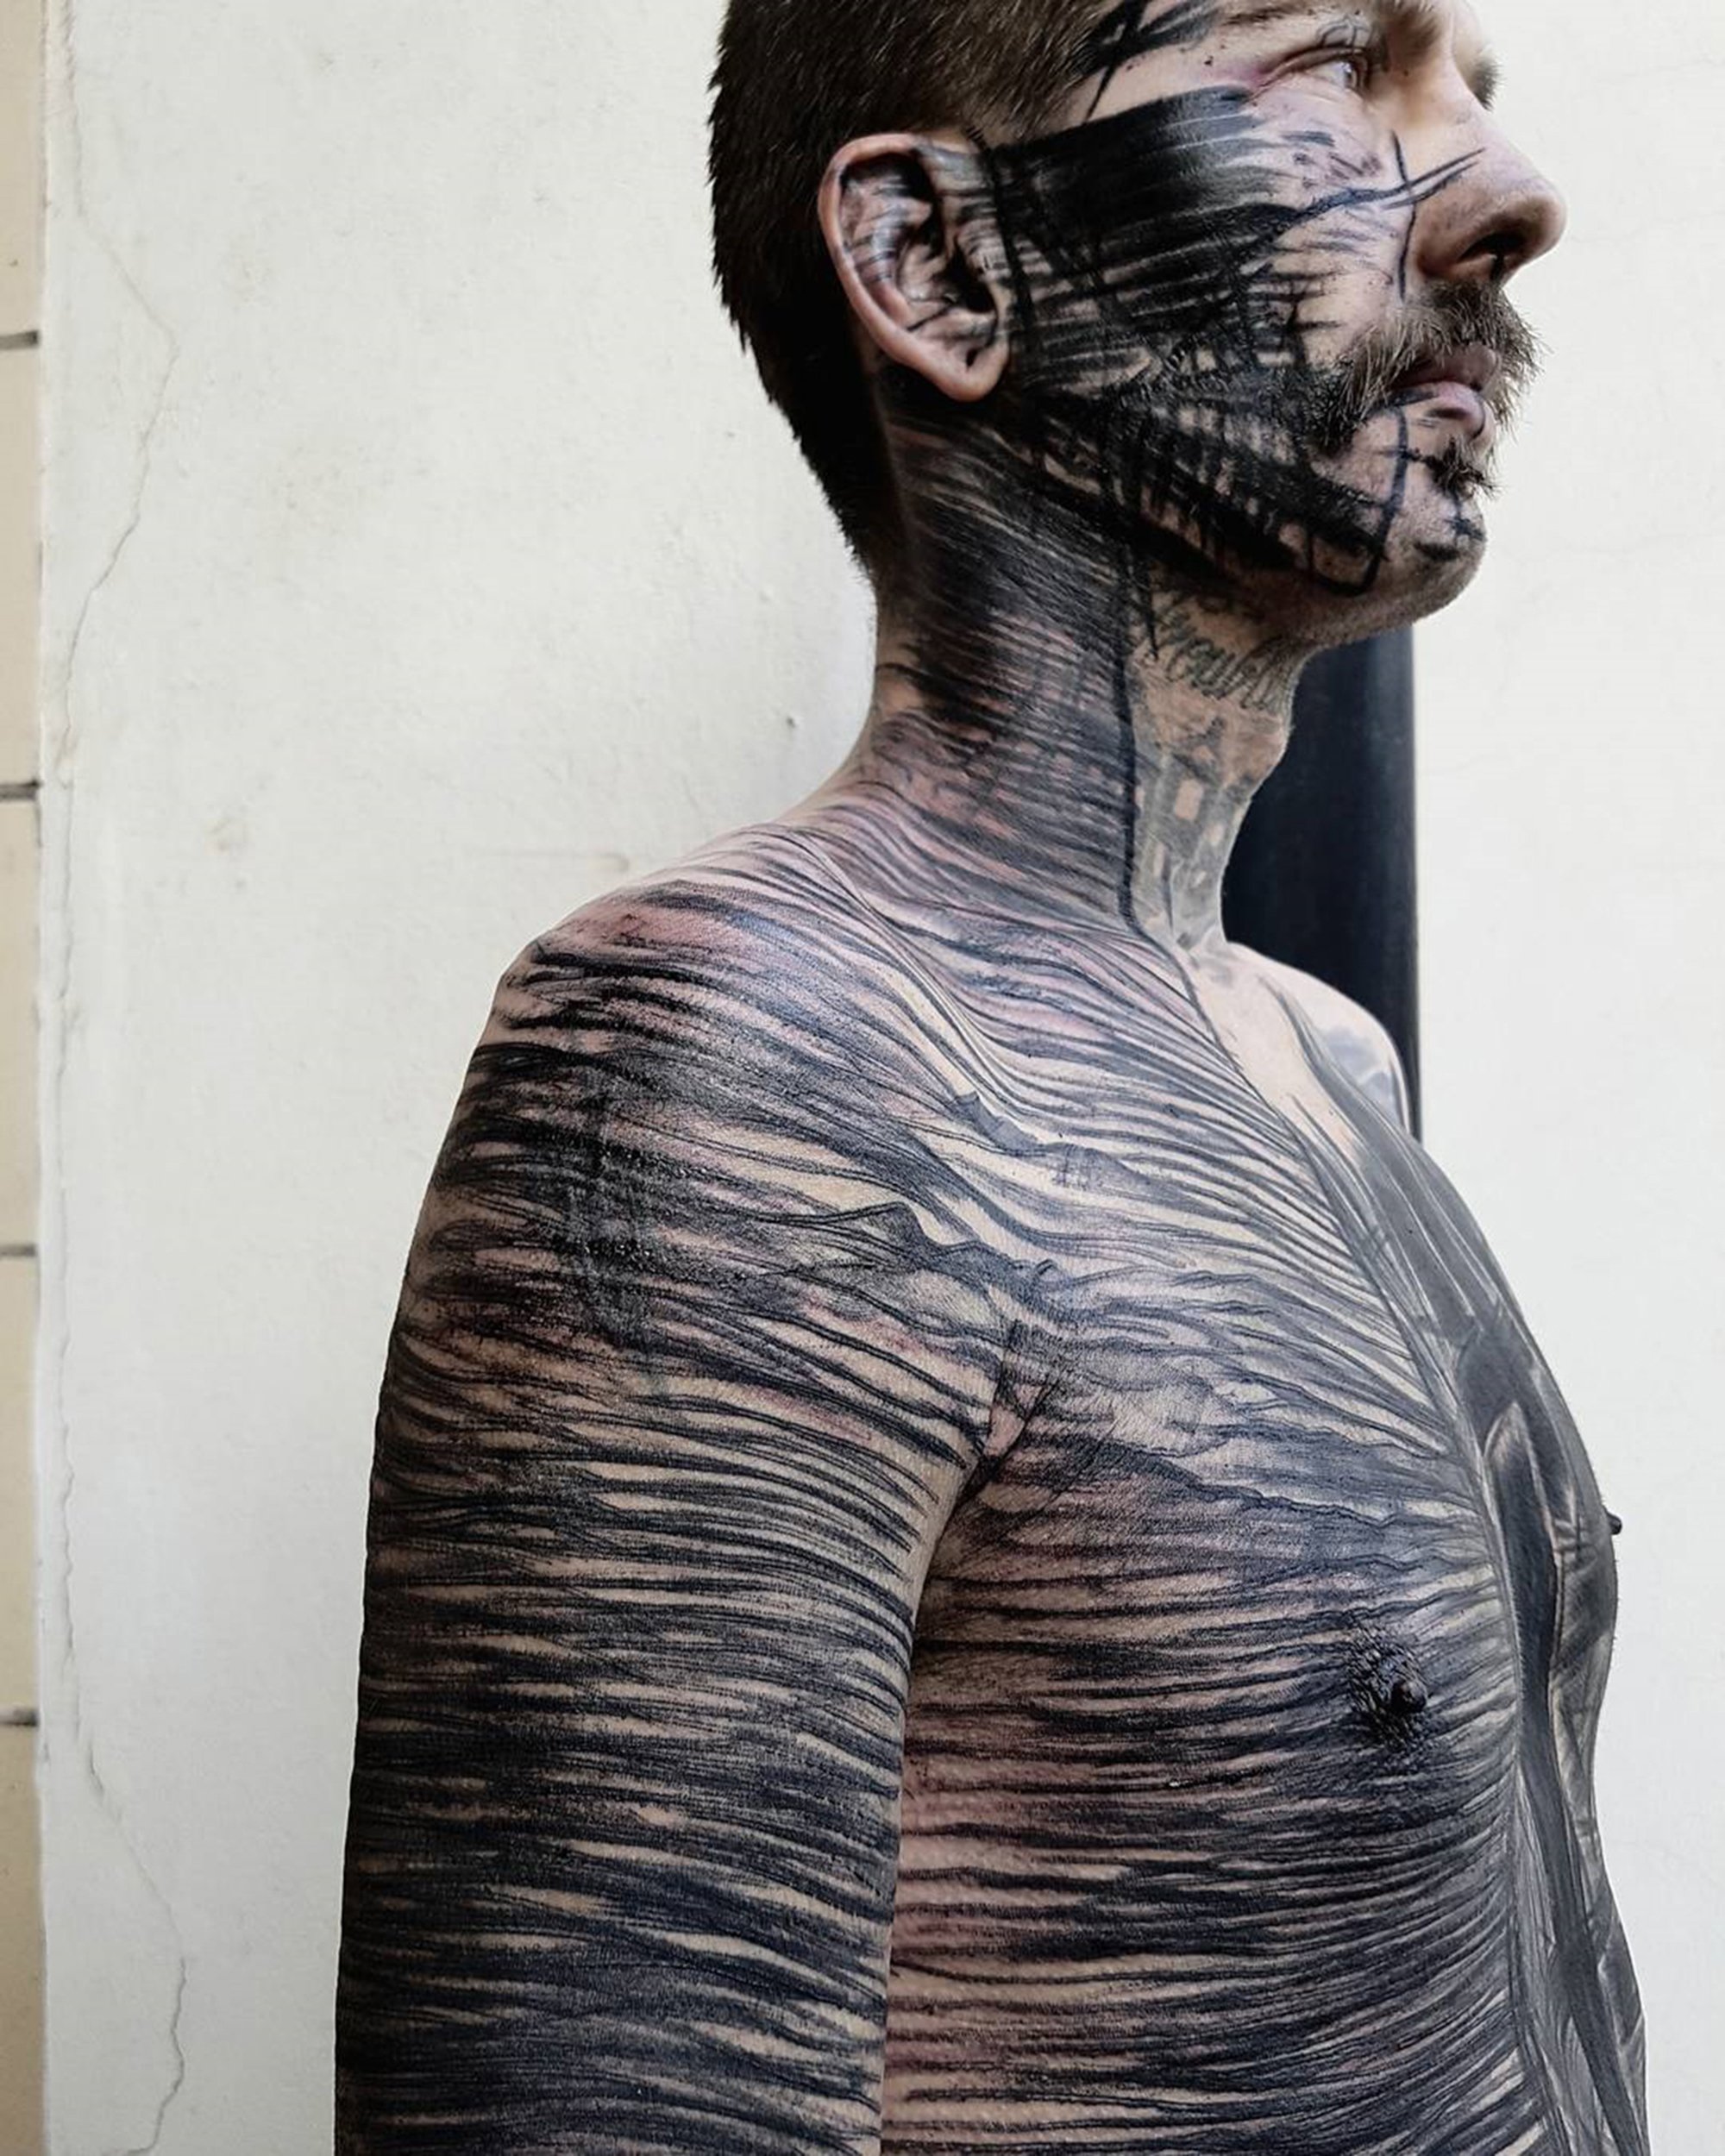 black sketchy stripes on body, brutal tattoo